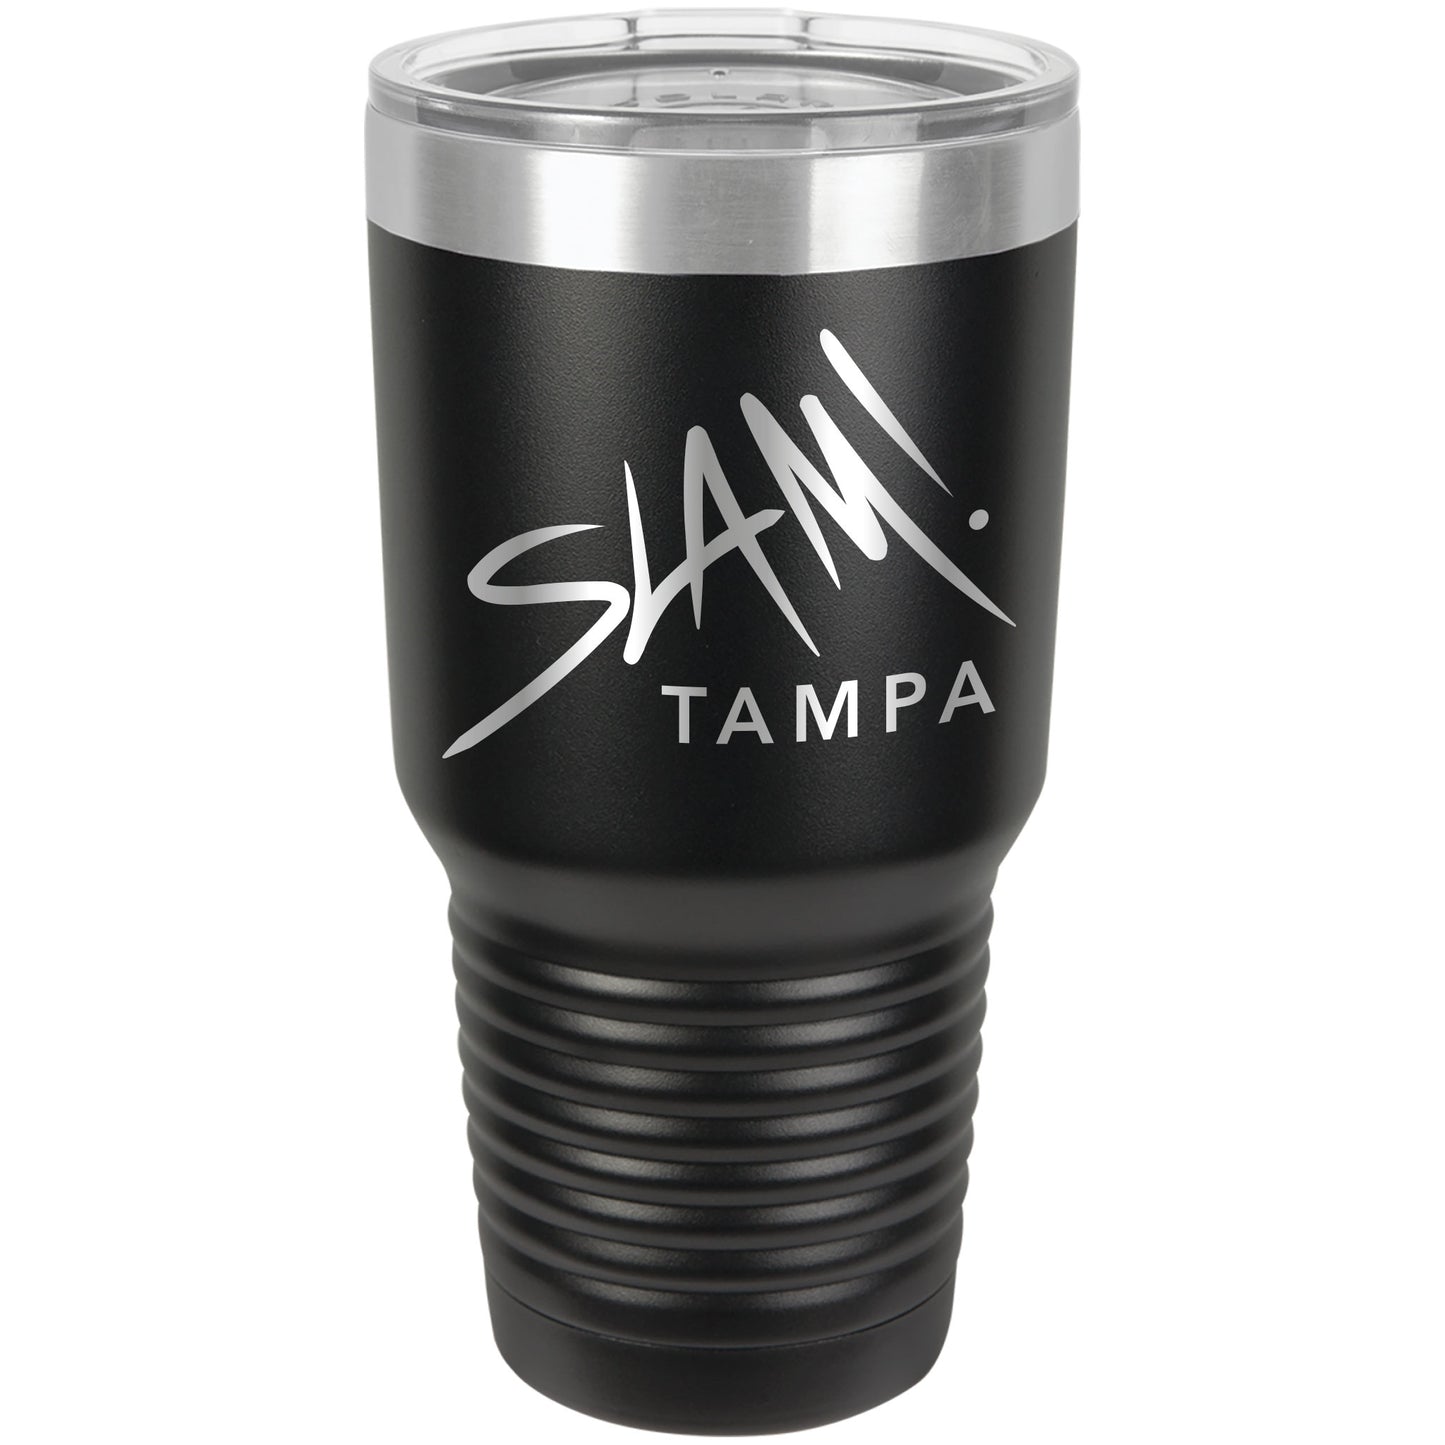 Slam! Tampa 30oz Tumbler with Laser Engraved Logo